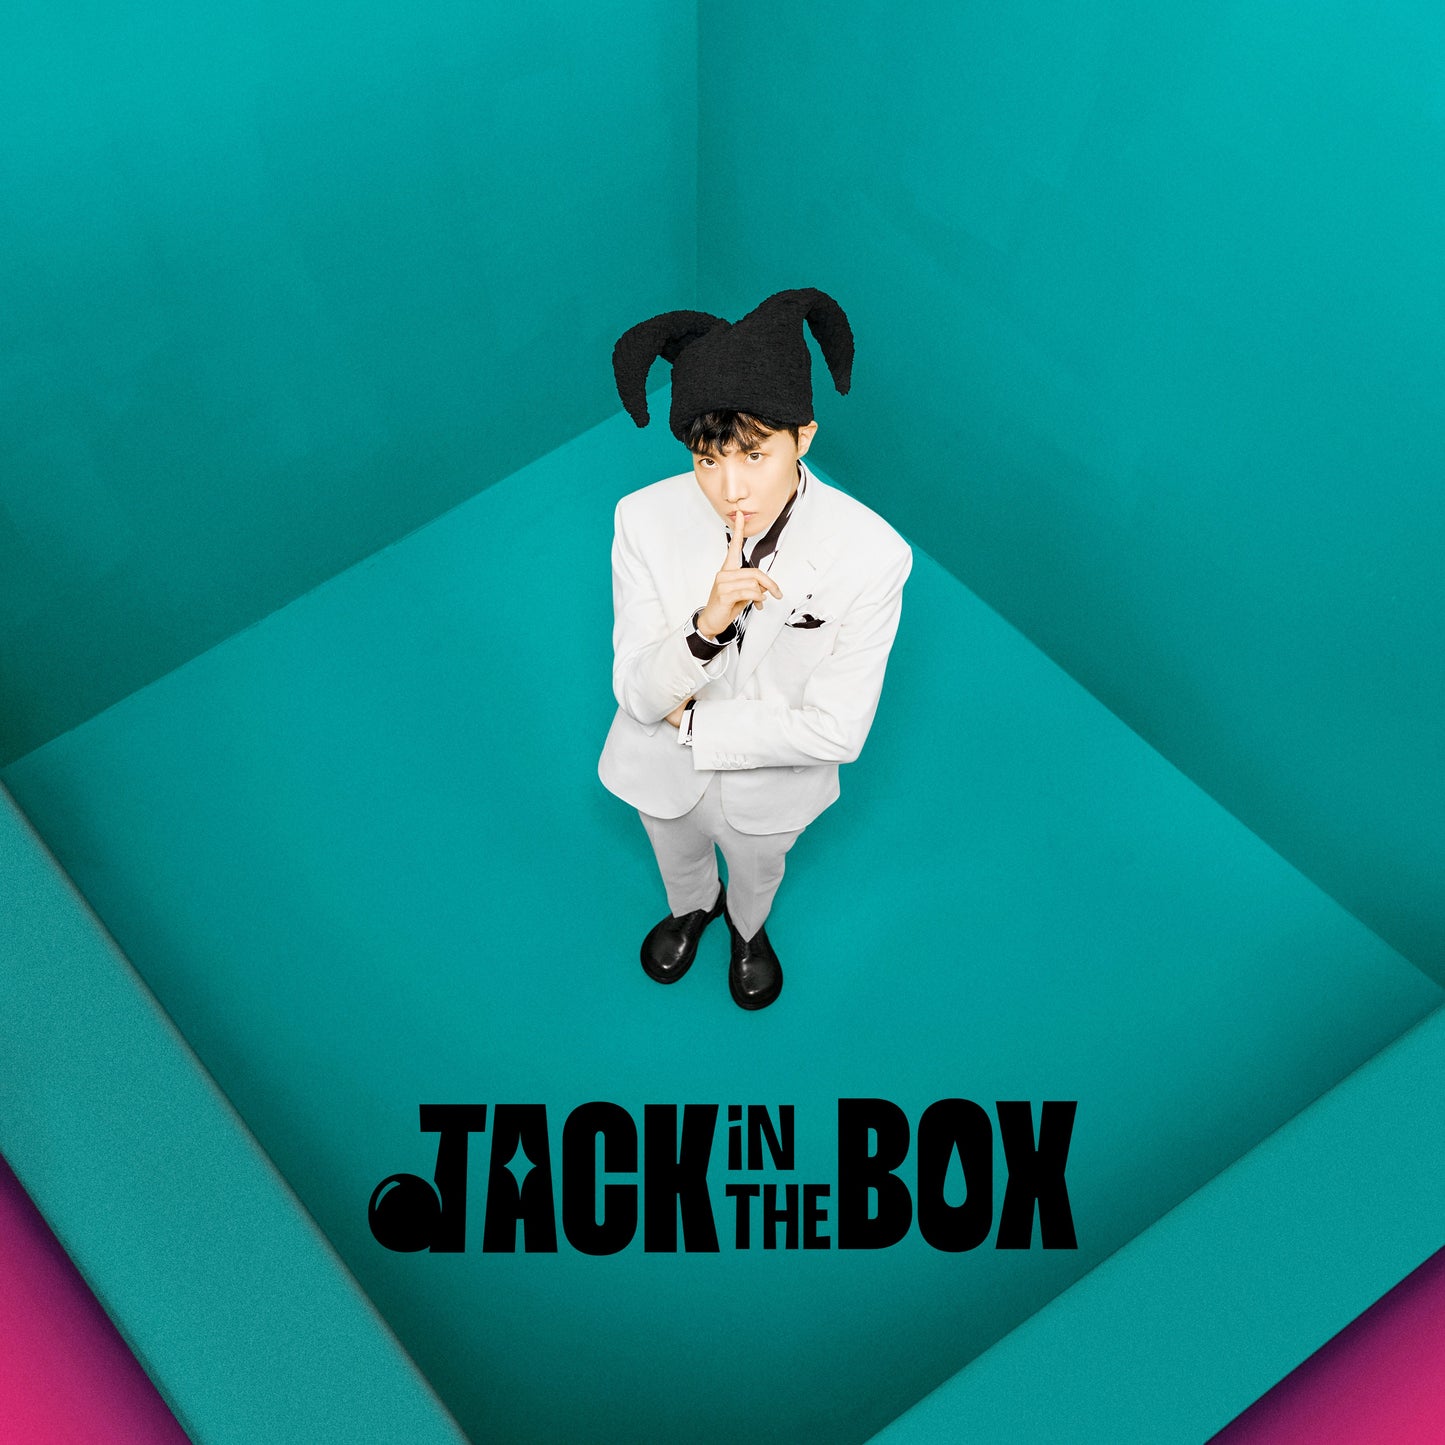 J-Hope - Jack in The Box (Weverse Album)